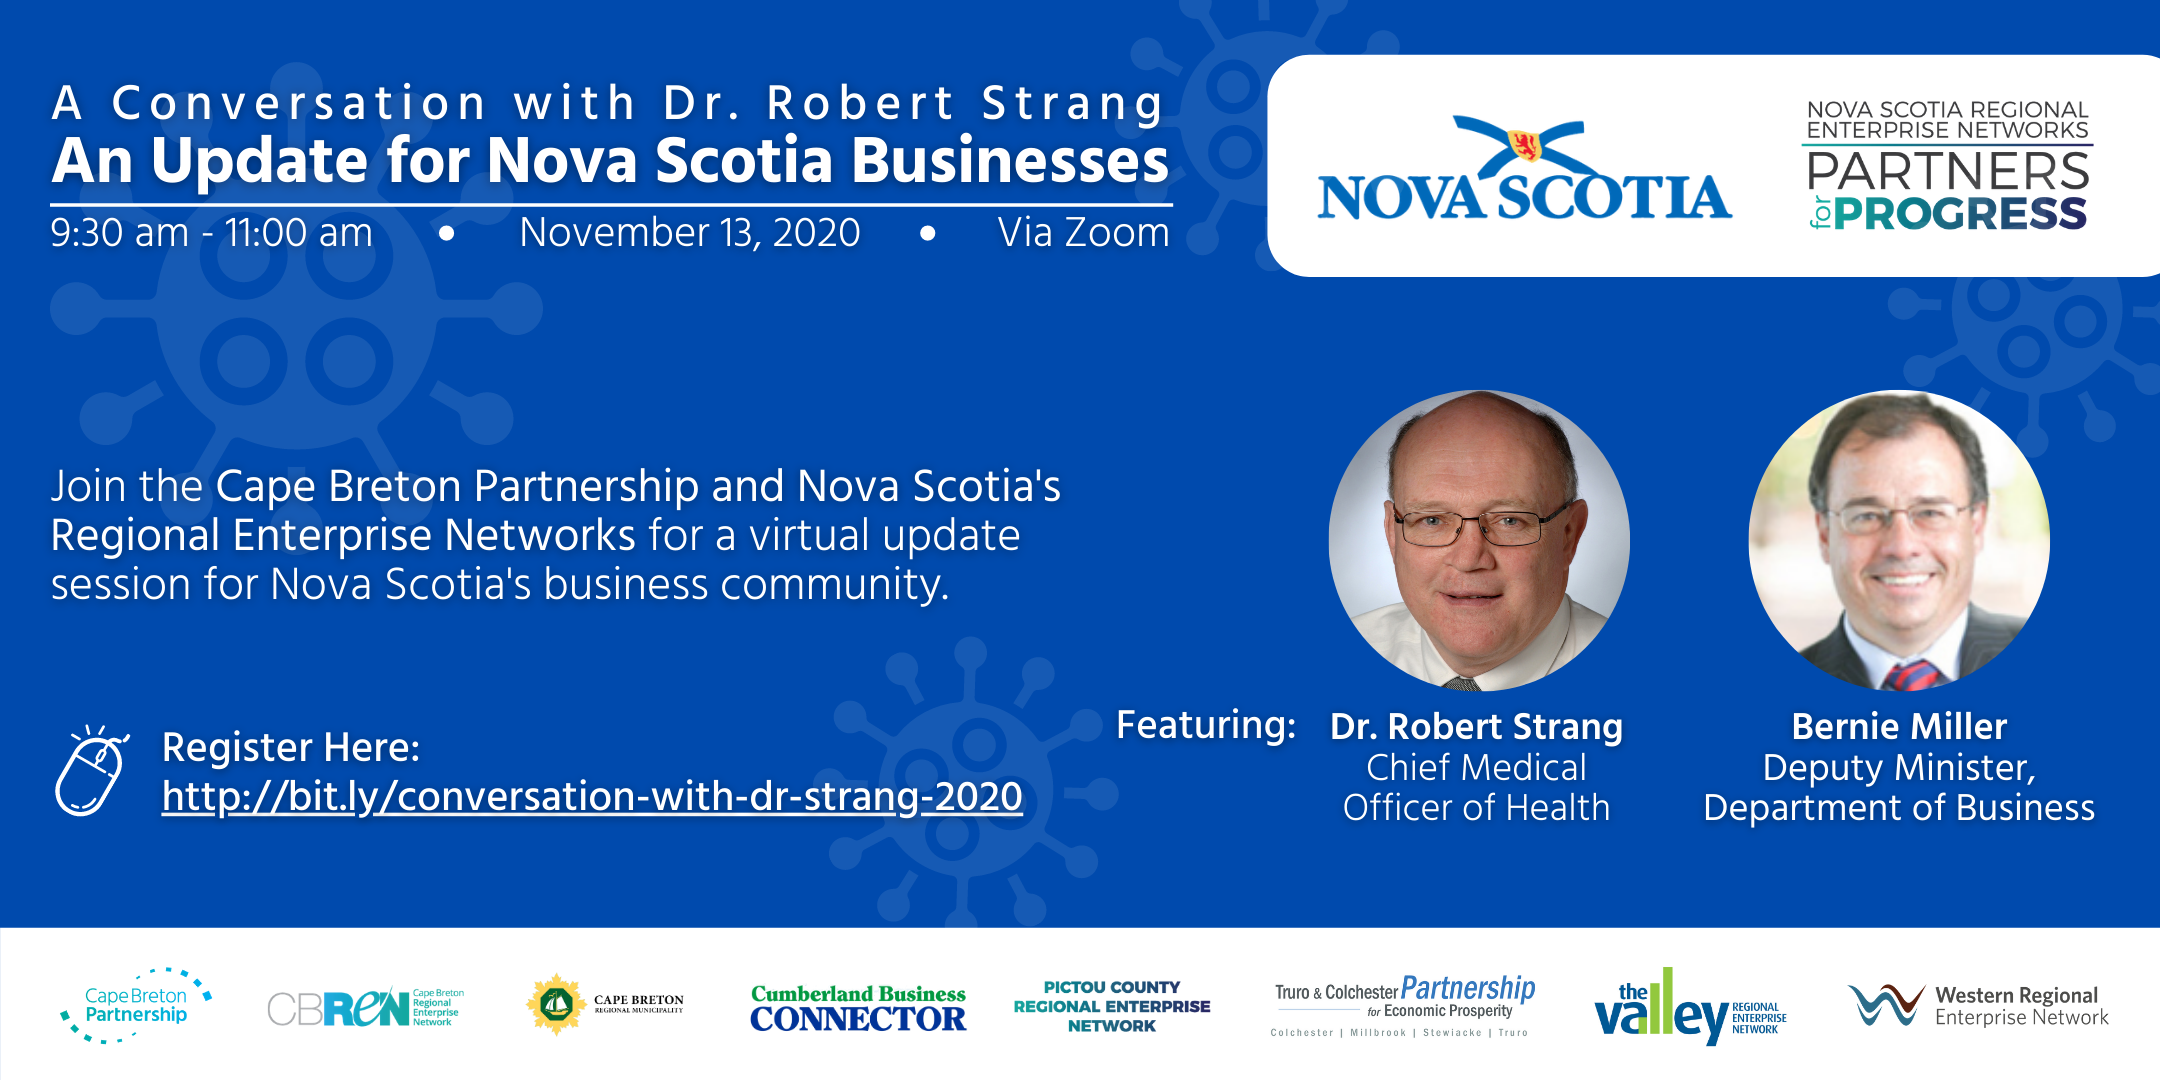 An Update for Nova Scotia Businesses